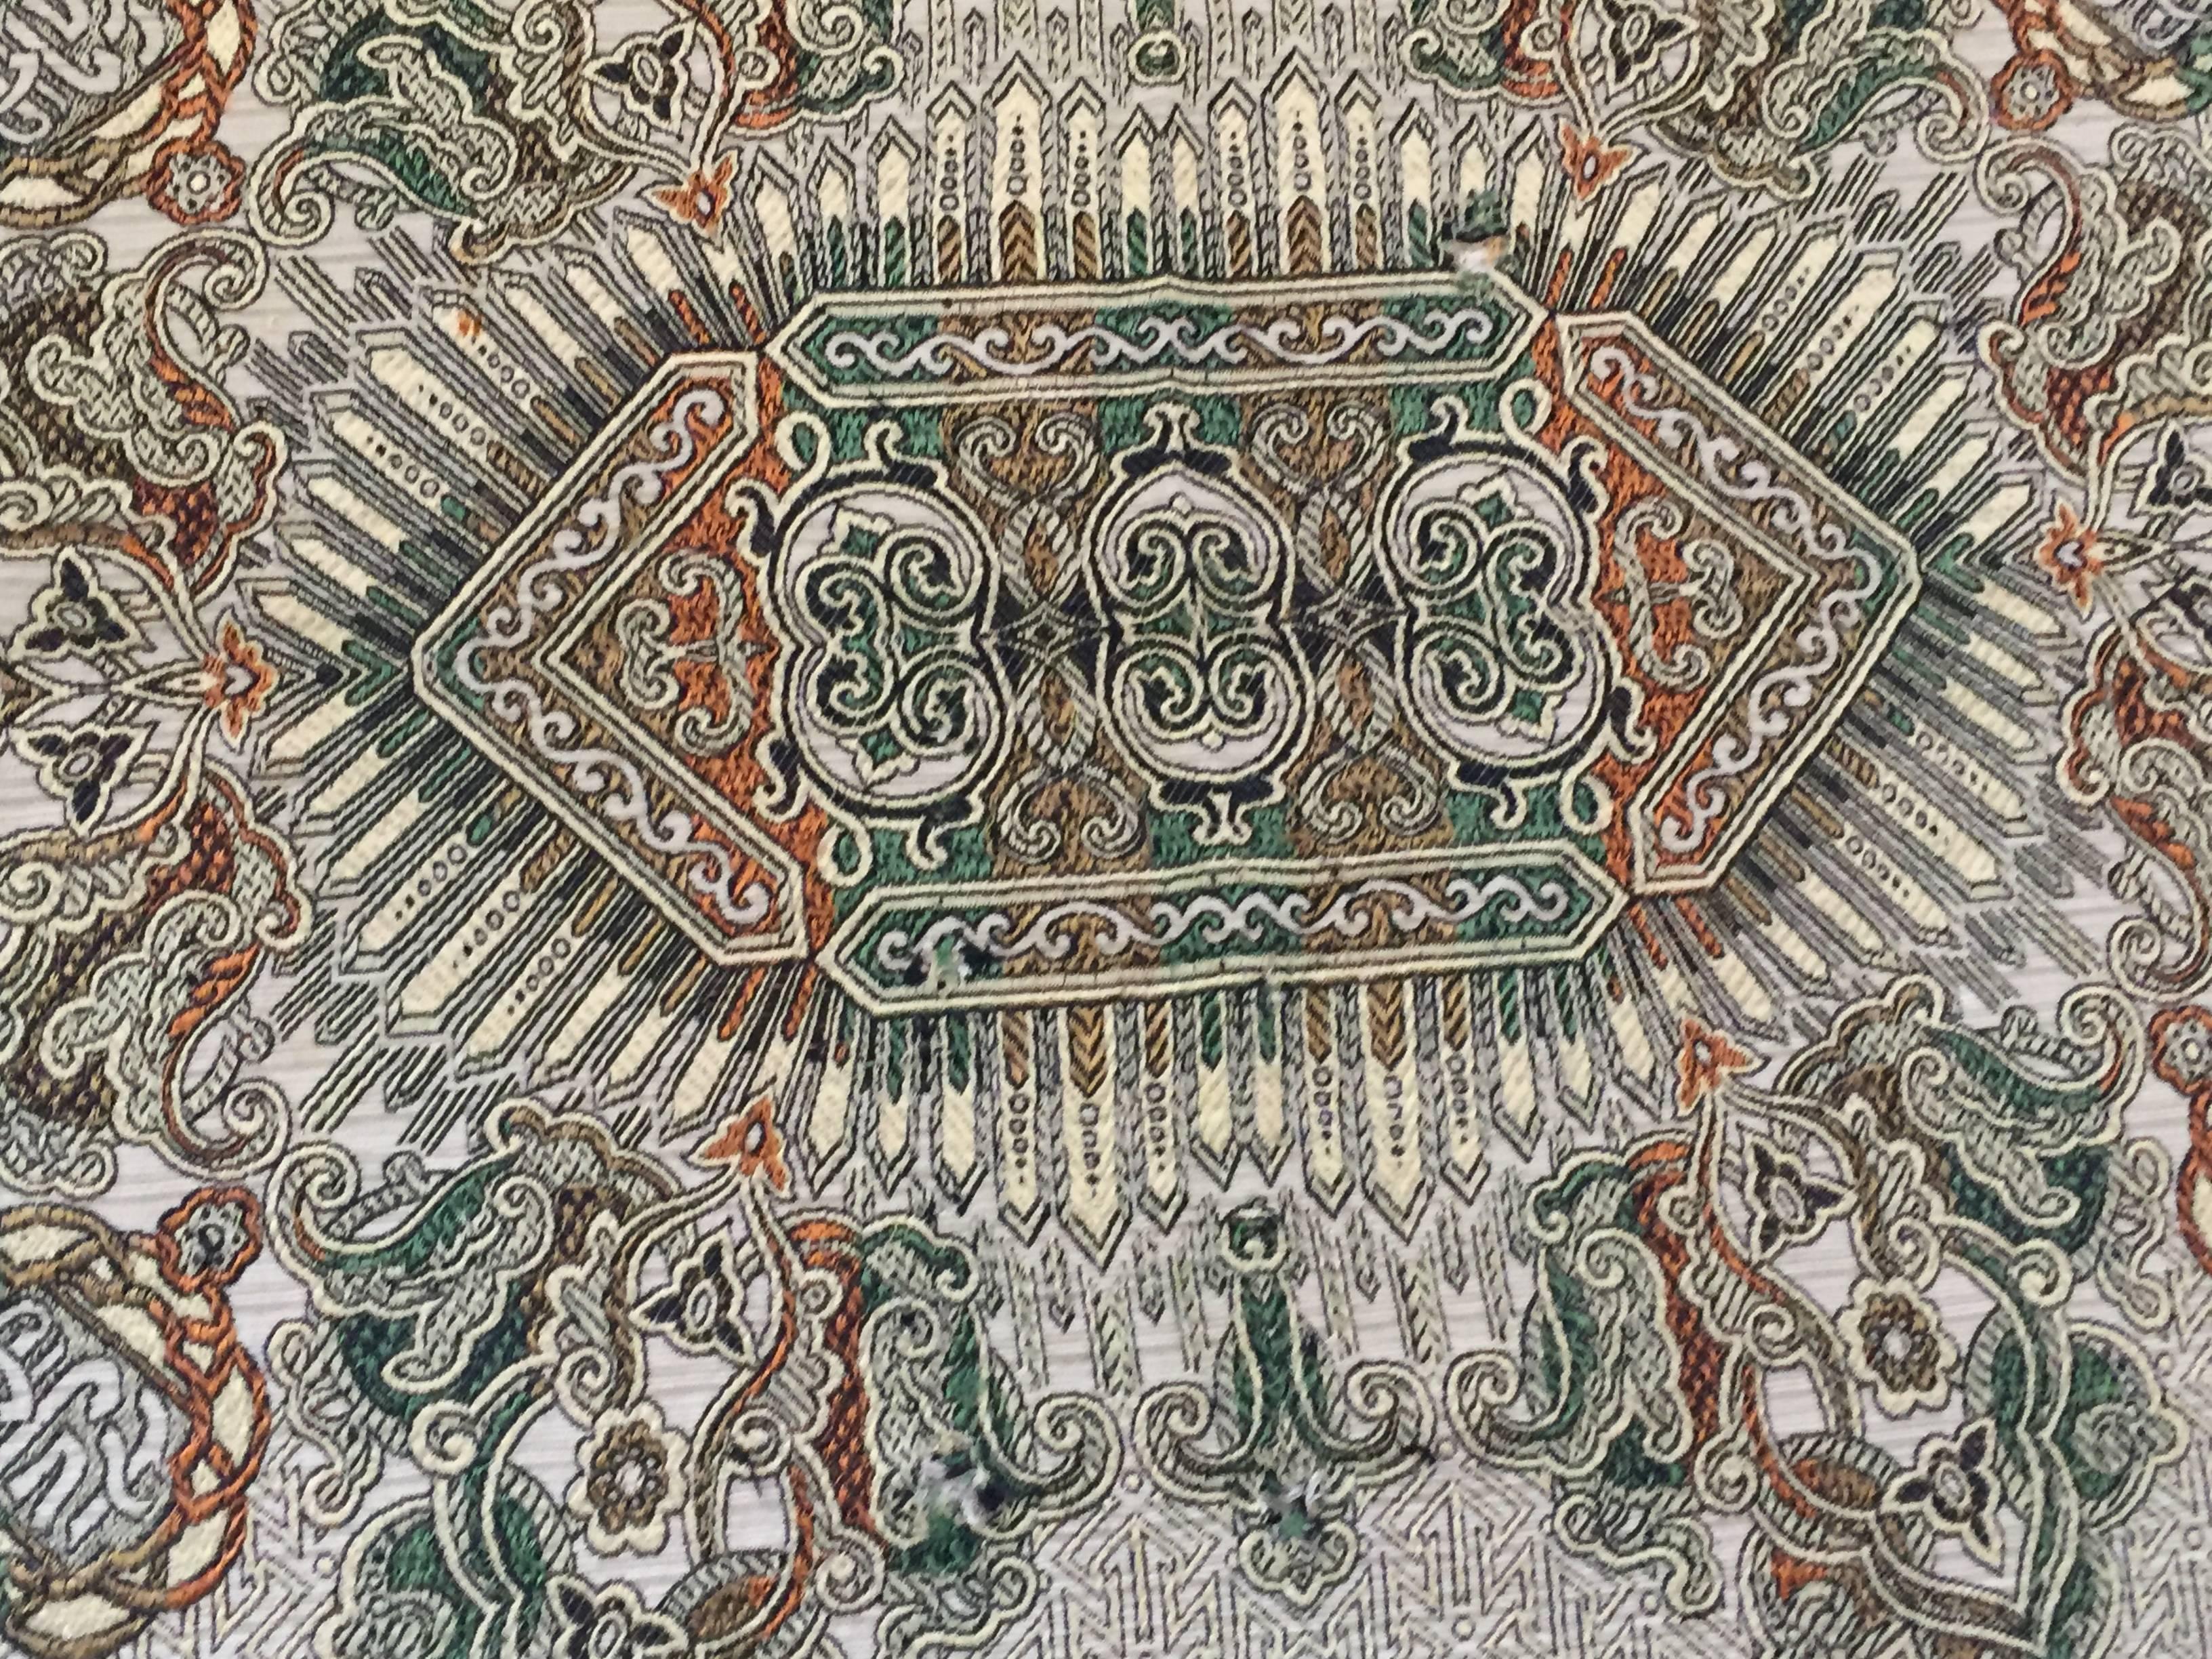 Spanish Granada Islamic Spain Textile with Moorish Calligraphy Writing